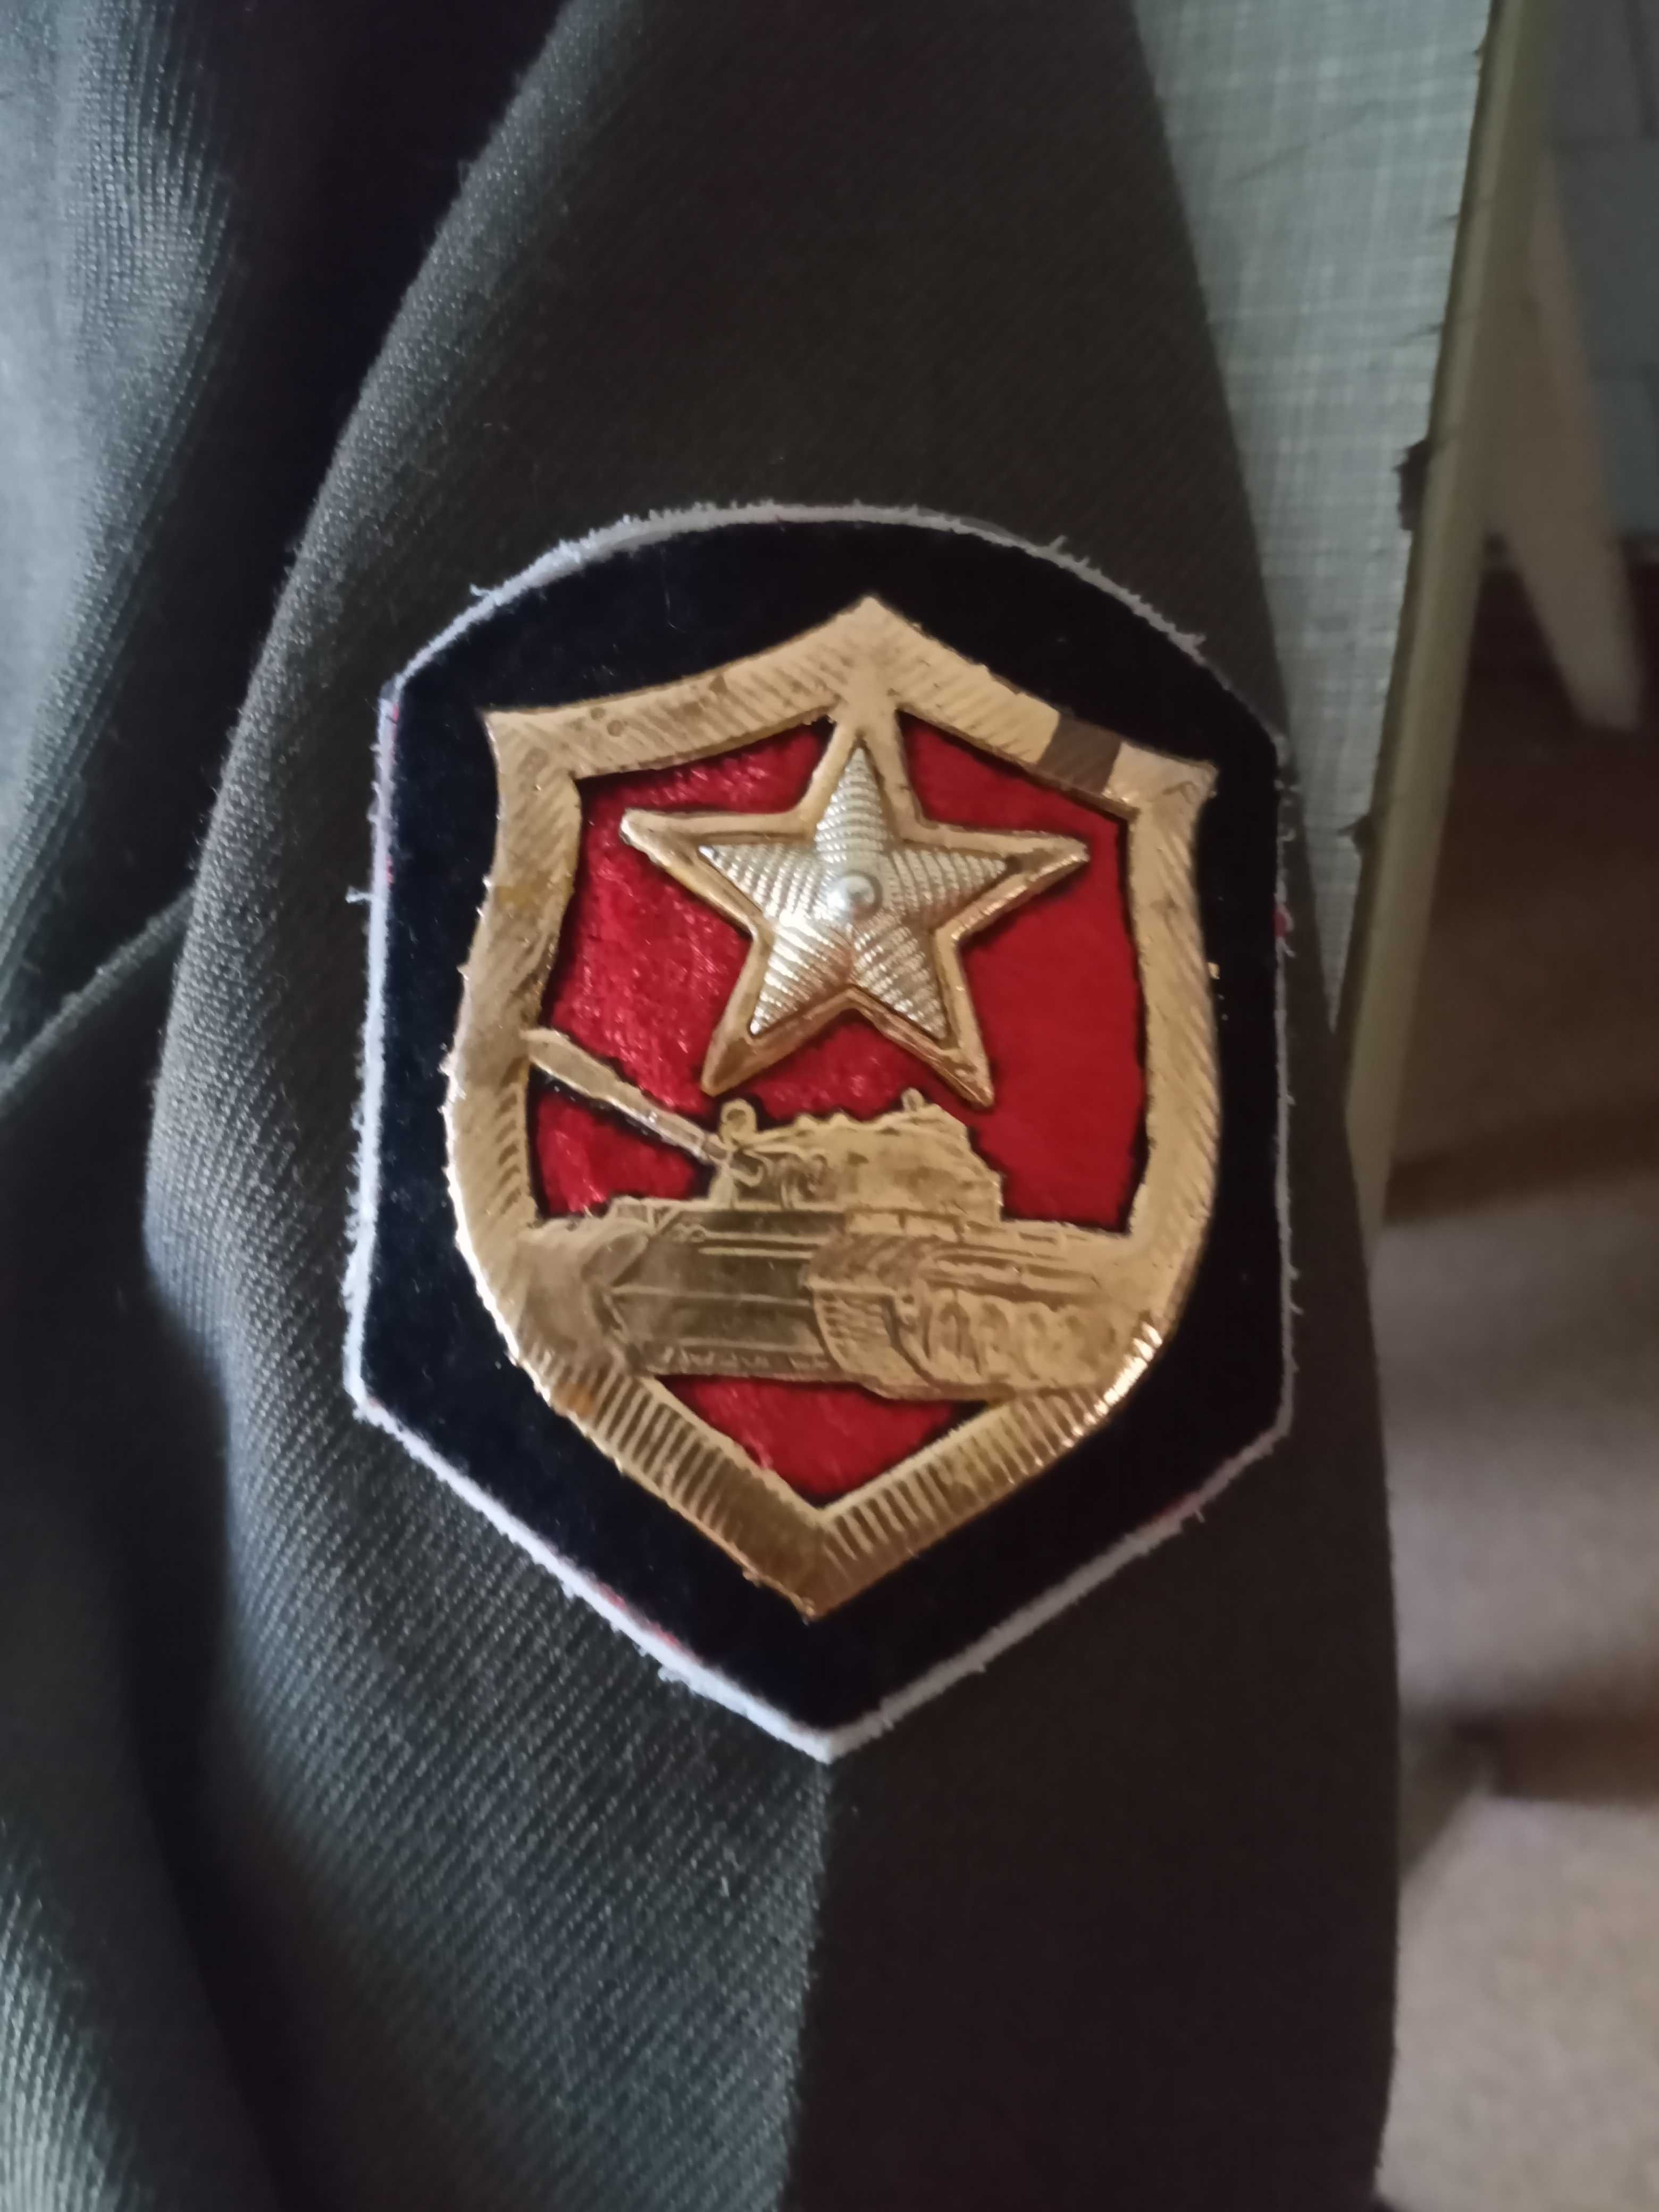 Китель, рубаха  гвардии сержанта  СА (СССР)